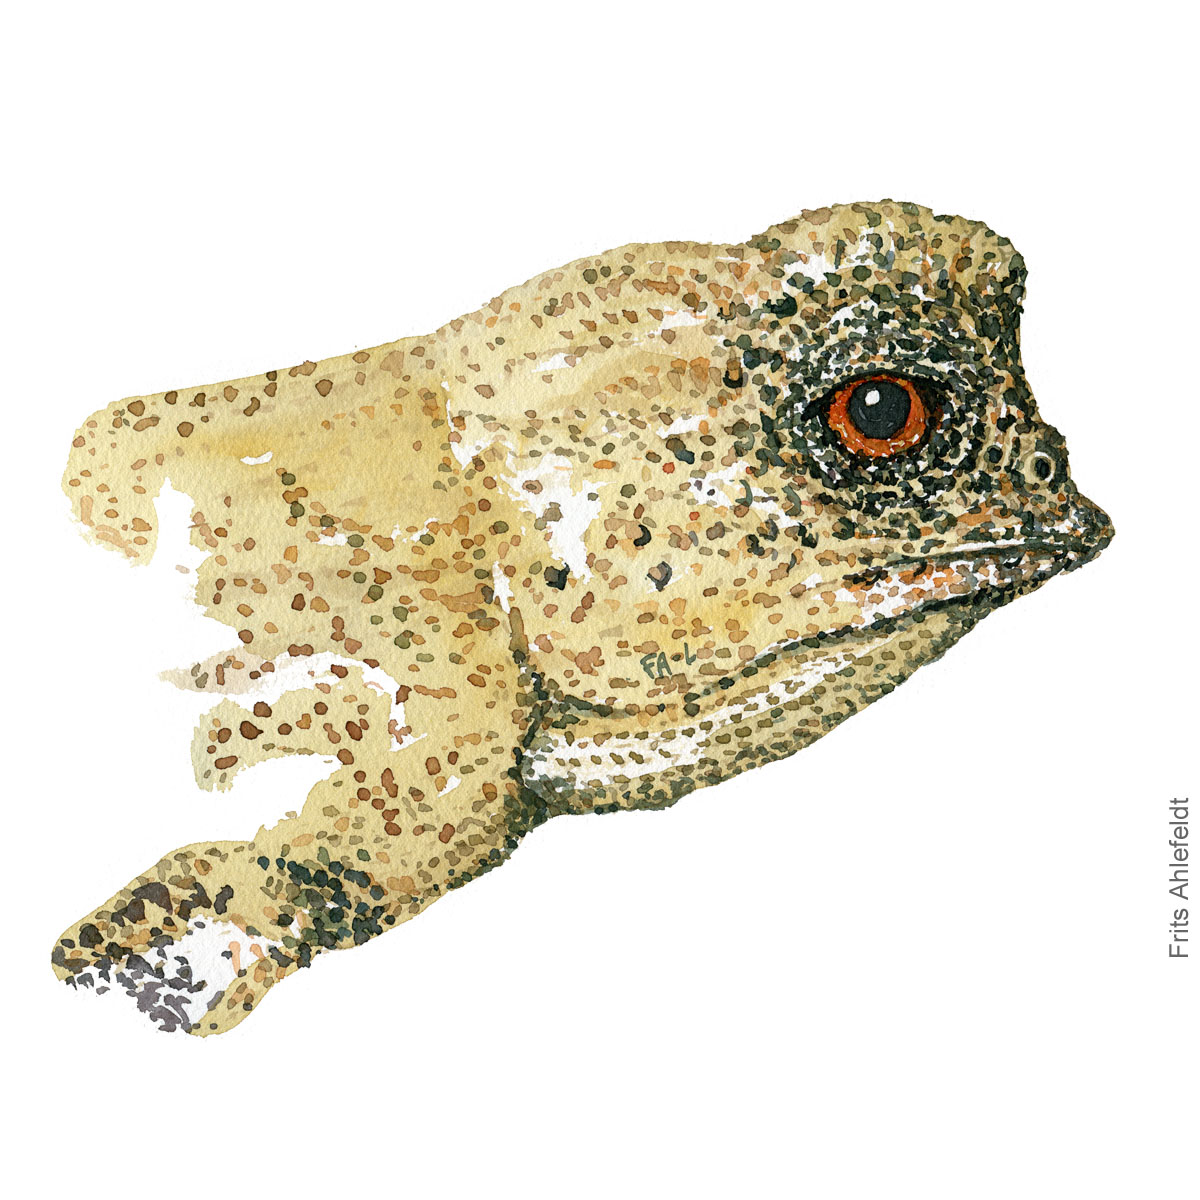 Dvaerg kamaeleon - Dwarf chameleon head. watercolor illustration. Painting by Frits Ahlefeldt - Fugle akvarel tegning